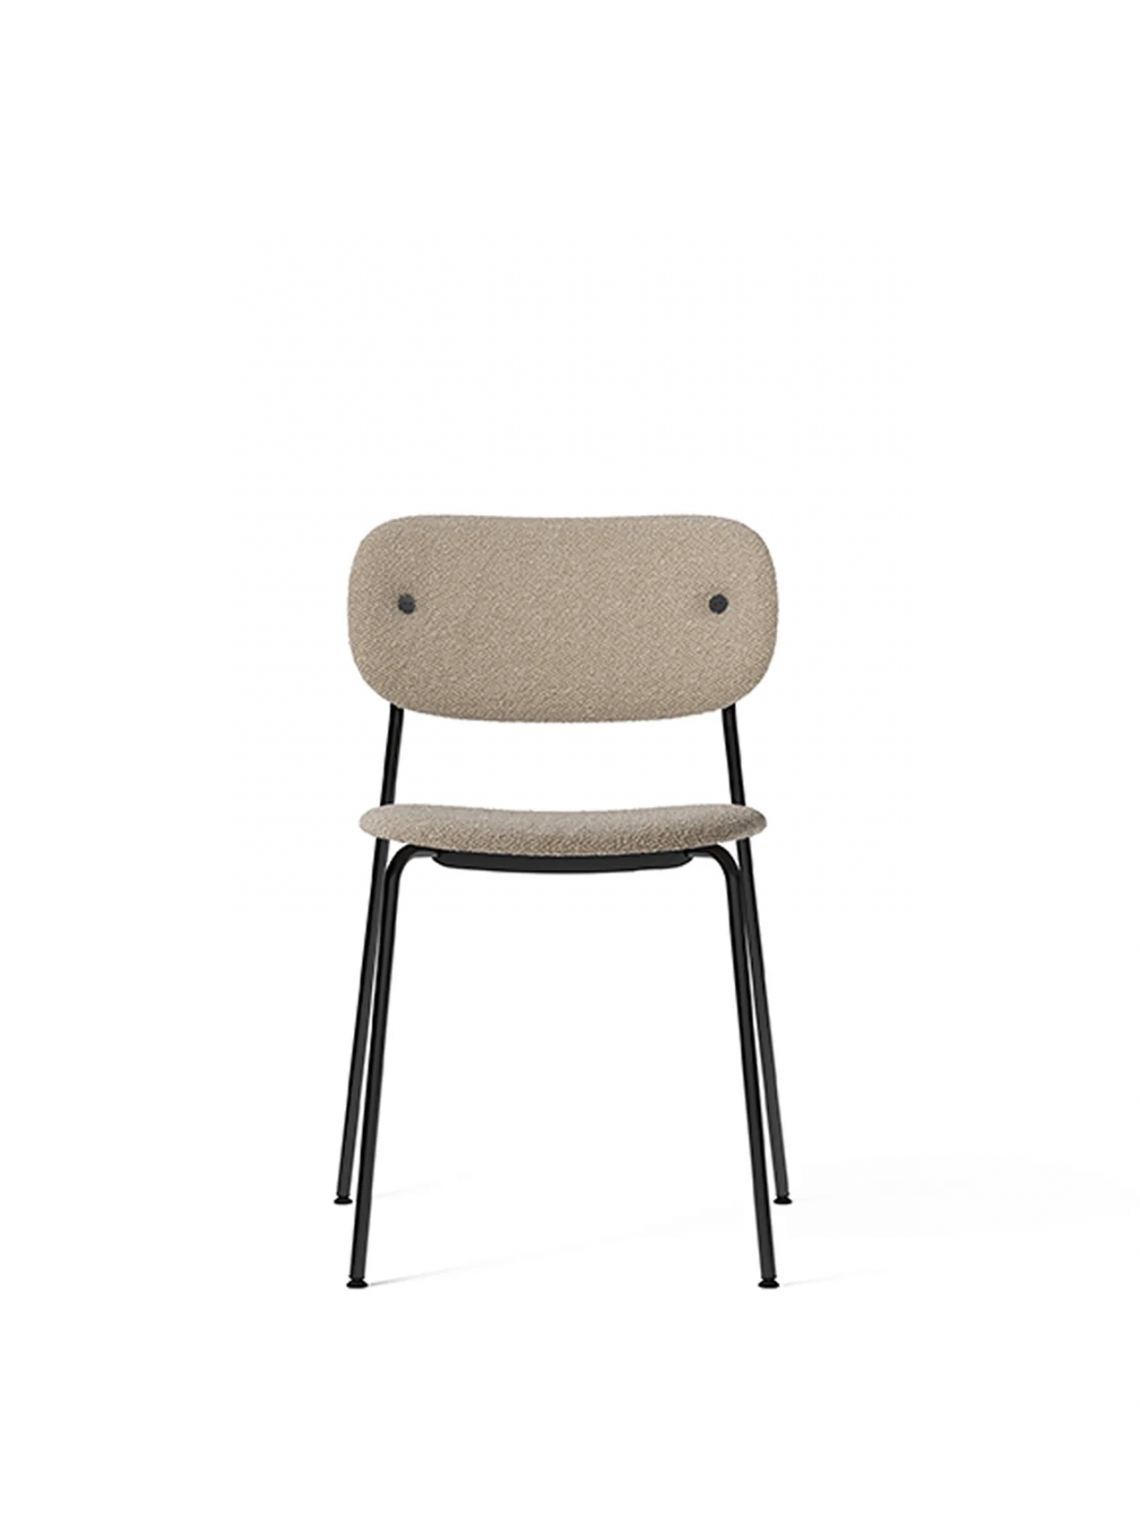 Co upholstered seat, Chrome餐椅细节图1